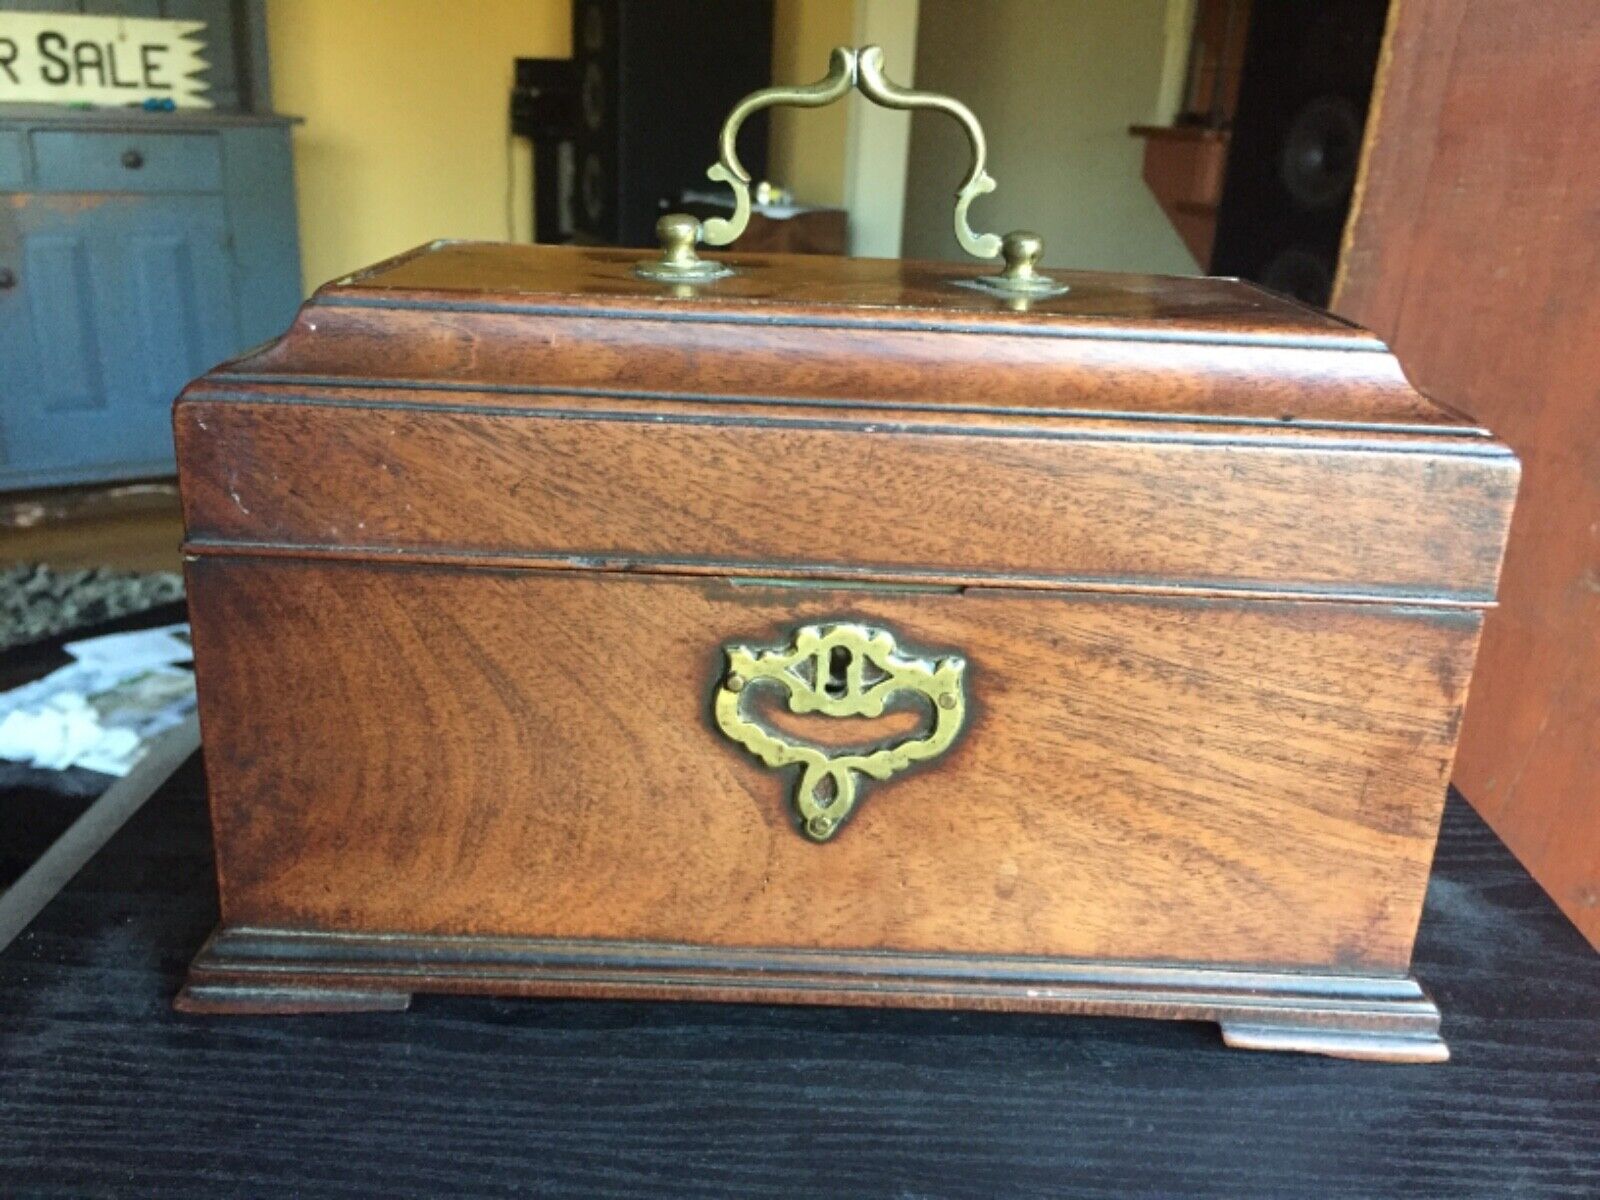 antique georgian tea caddy box chippendale english brass mahogany 1780 casket